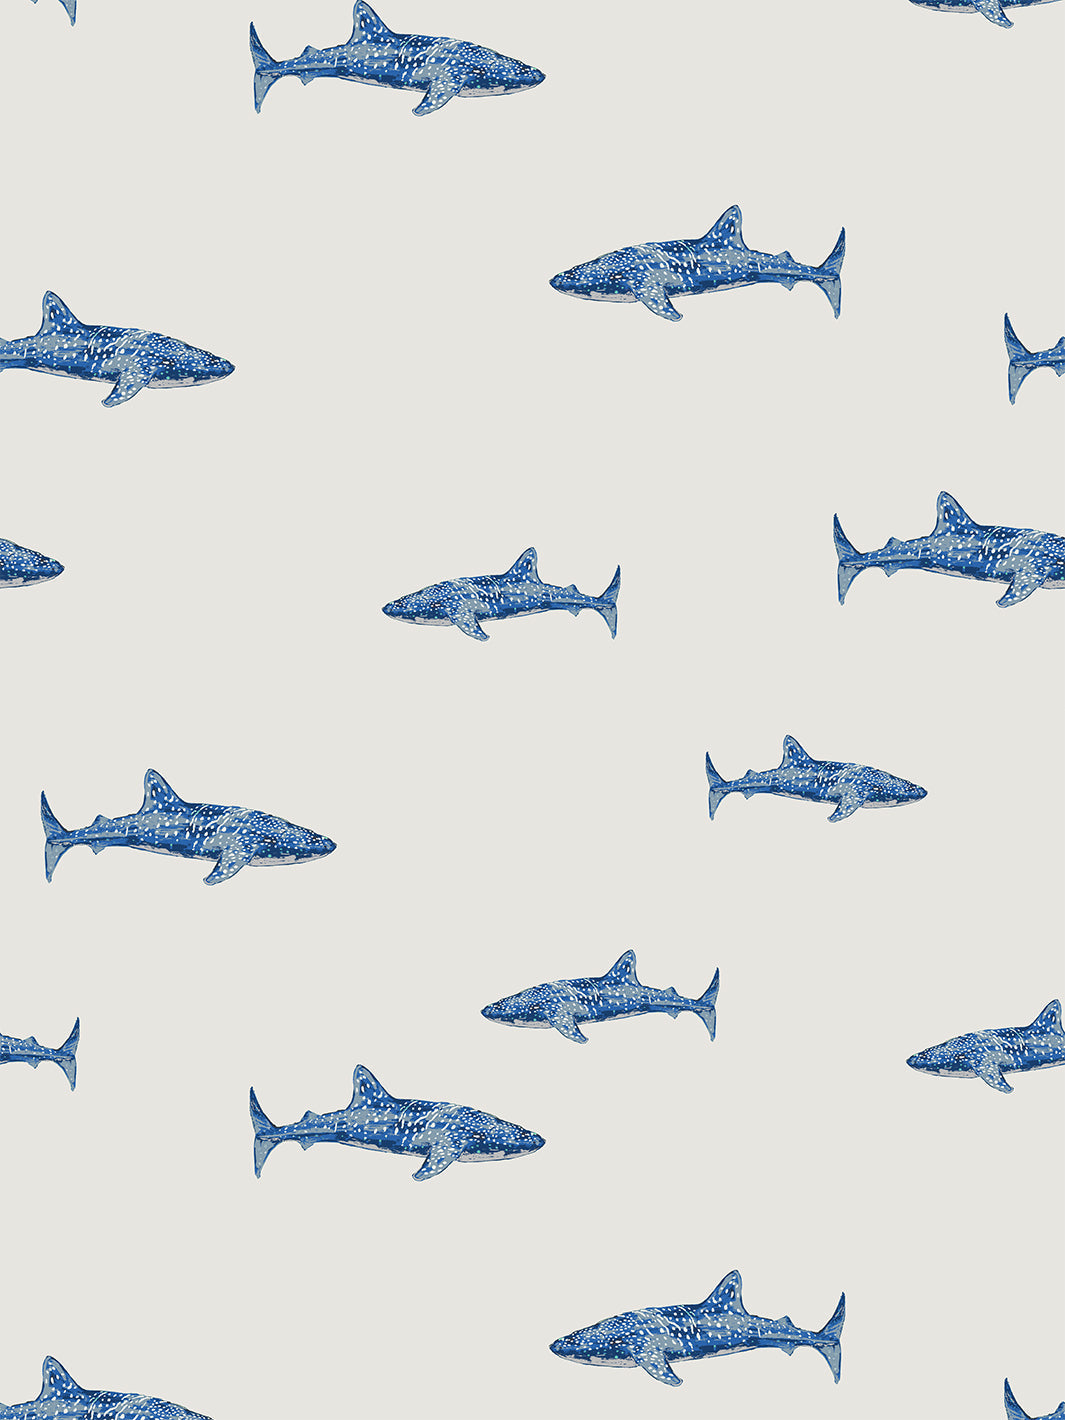 Shark Aesthetic Wallpapers